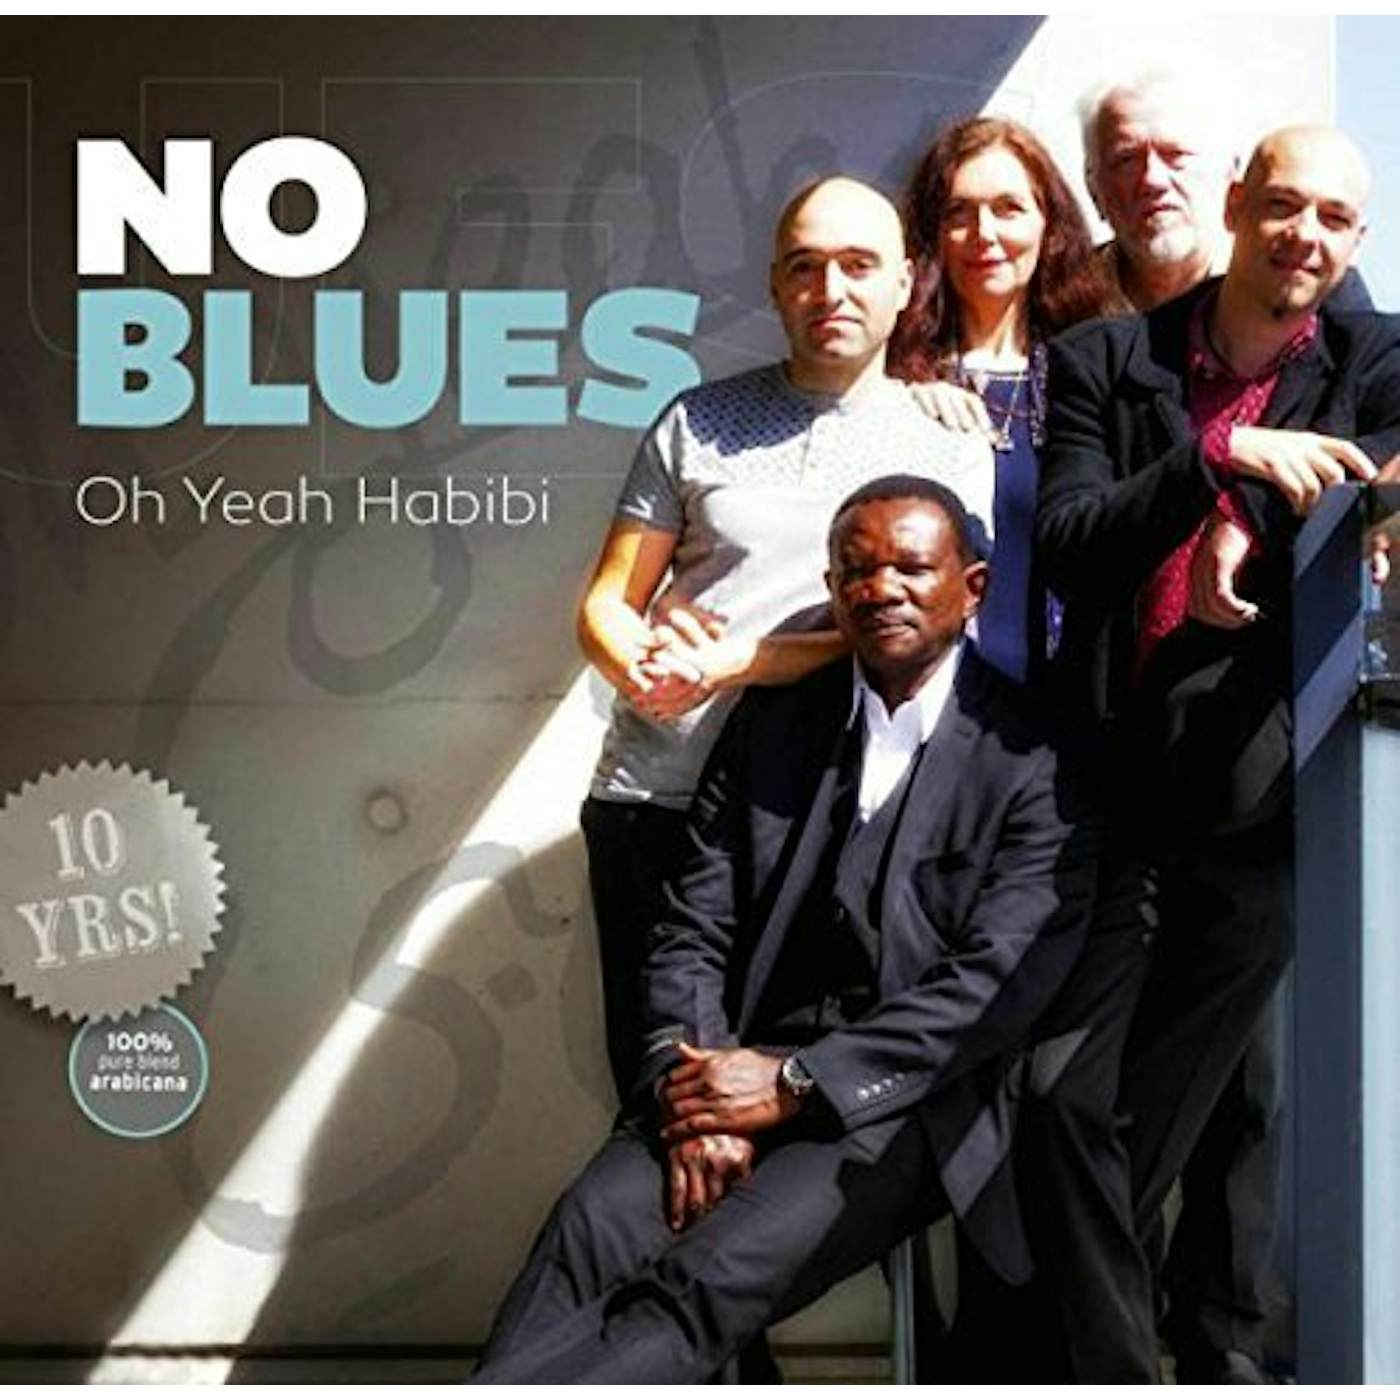 No Blues OY YEAH HABIBI CD